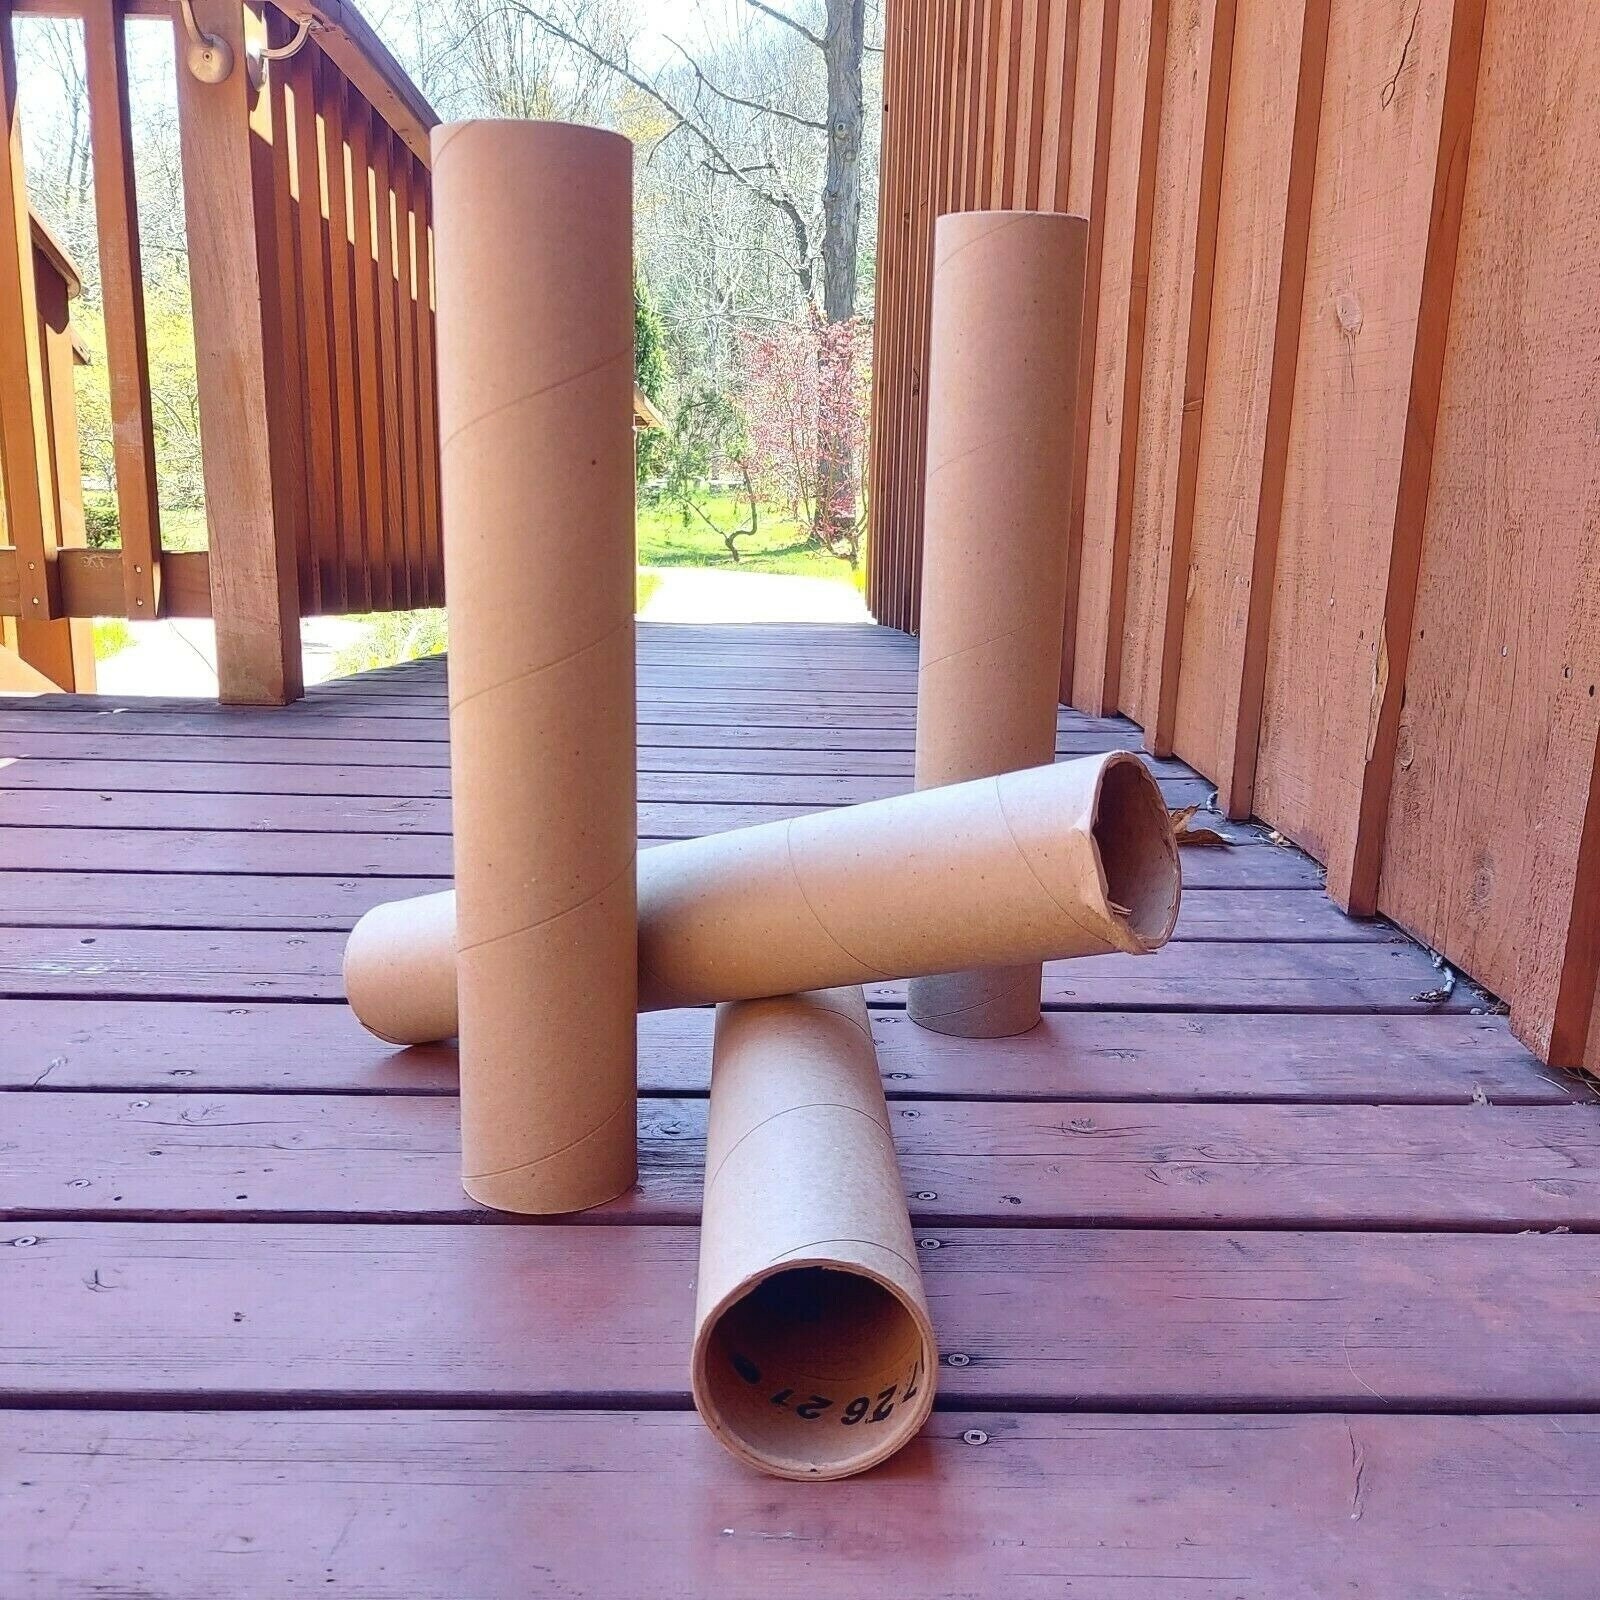 Set of 6 Cardboard Tubes, Craft Paper Tubes, Sturdy, Craft Supply,  Gardening 